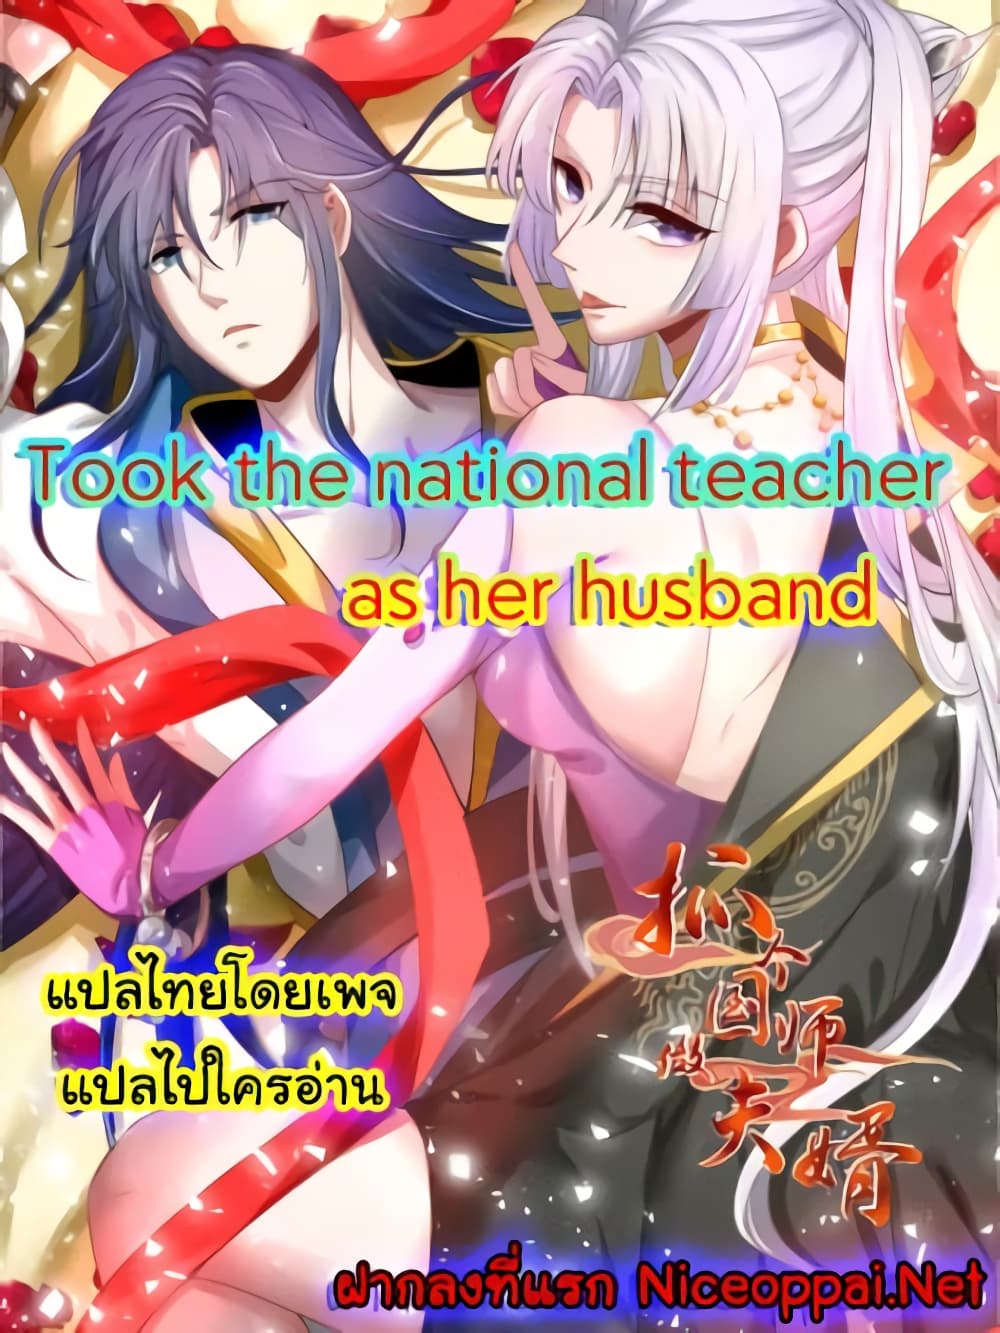 Took the National Teacher as Her Husband 21 (1)